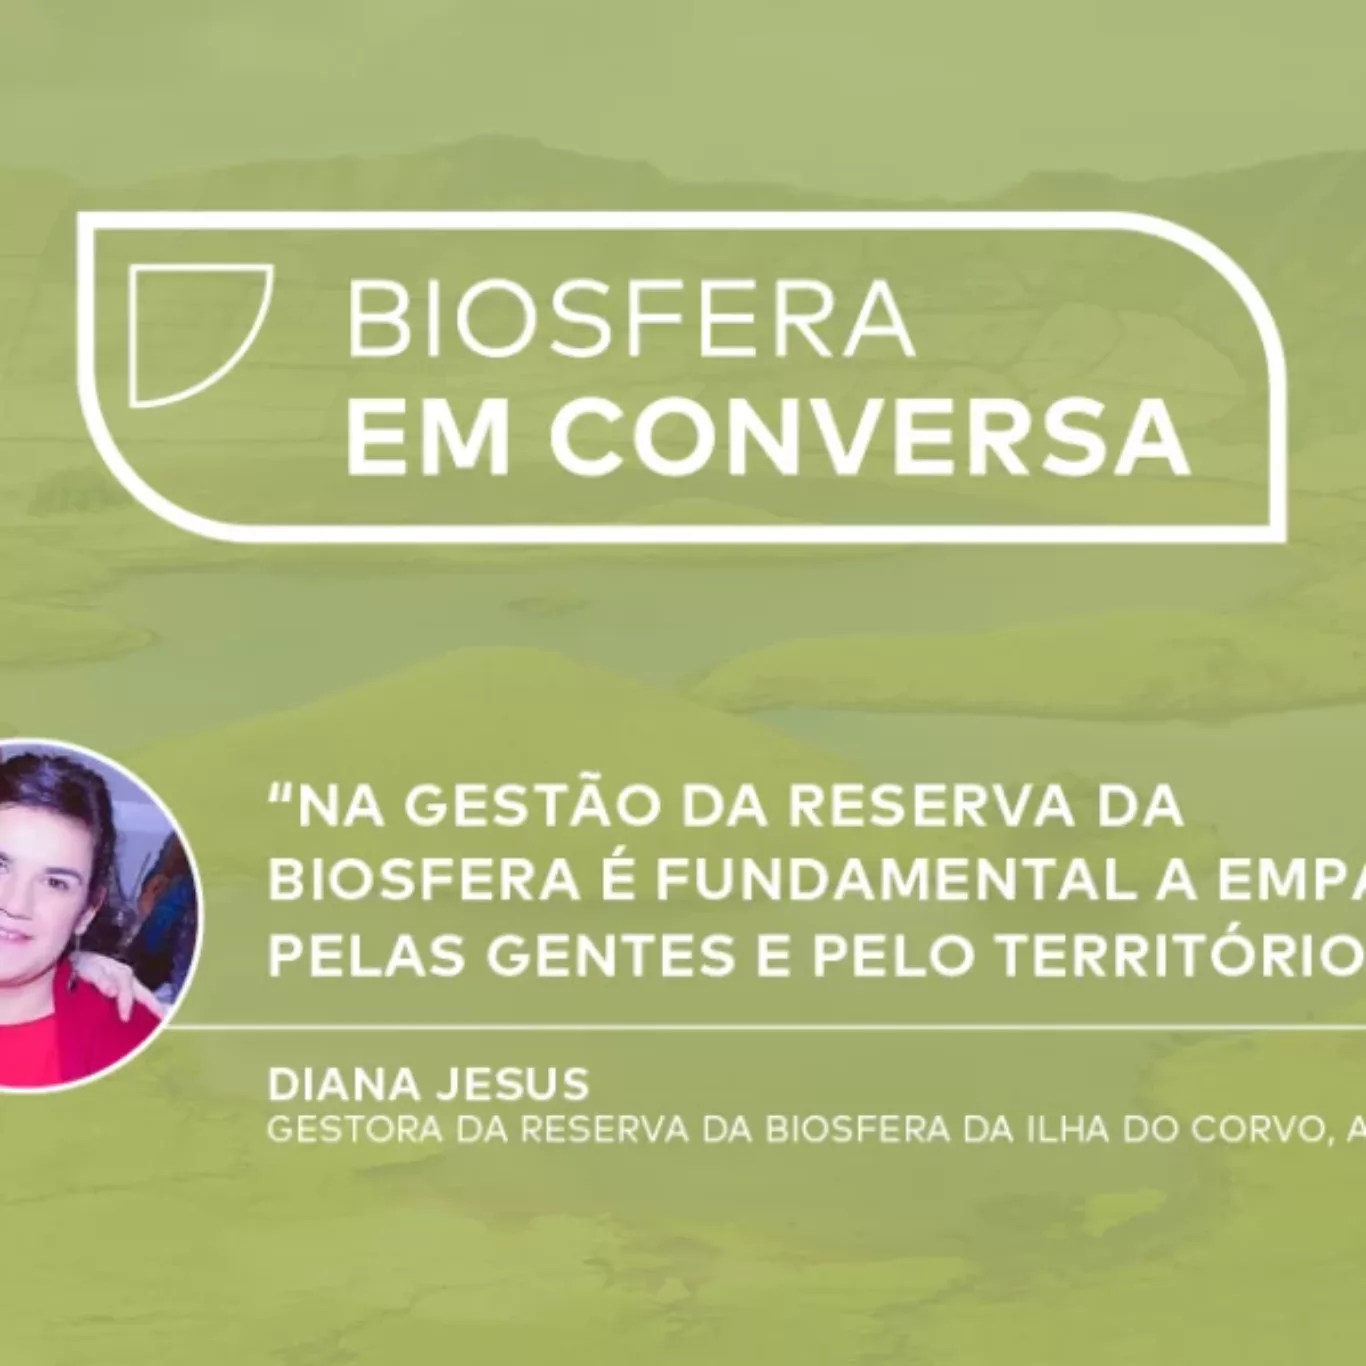 Biosfera em Conversa: Diana Jesus, Reserva da Biosfera da Ilha do Corvo